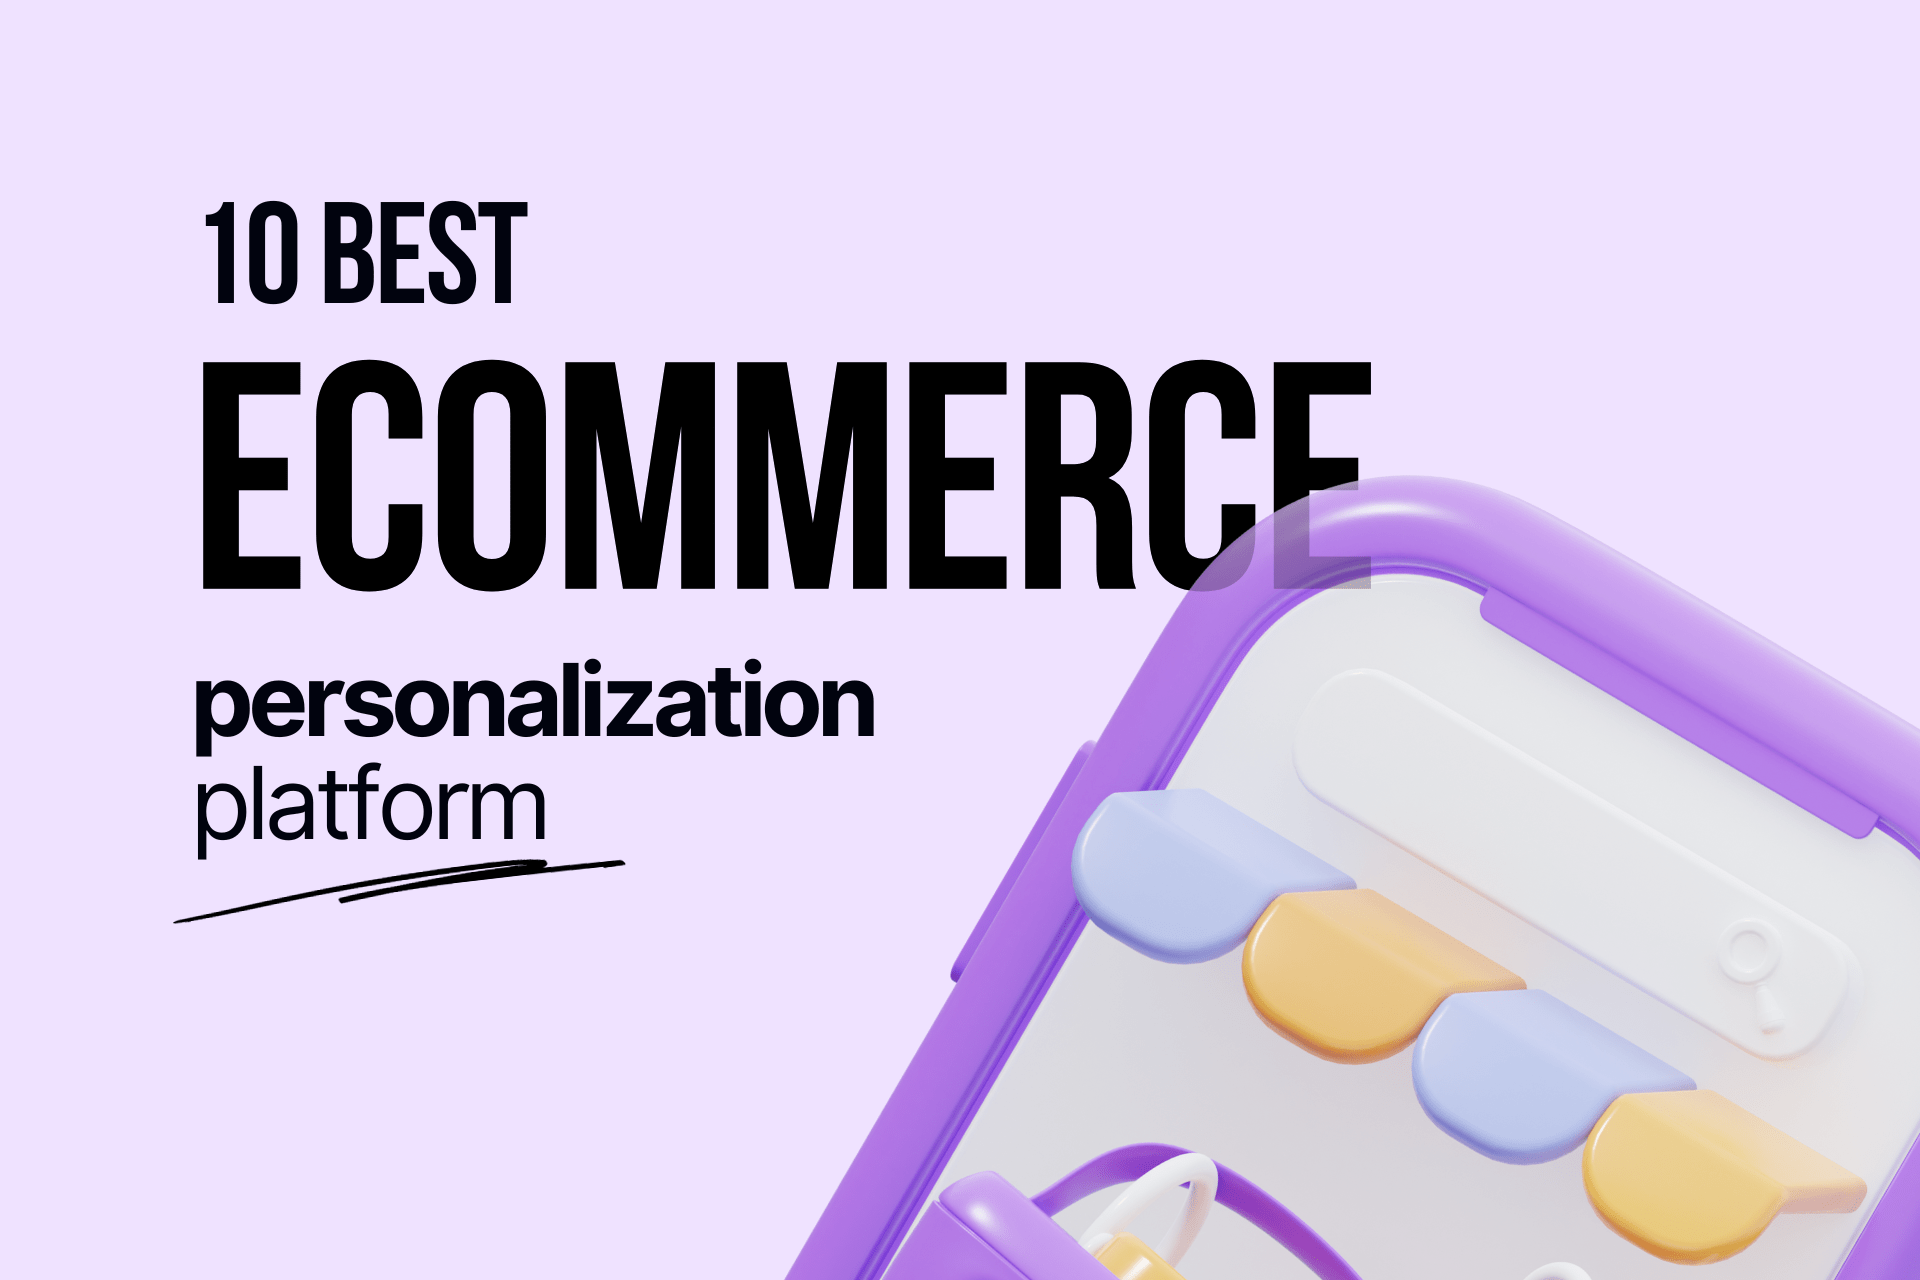 ecommerce personalization platform